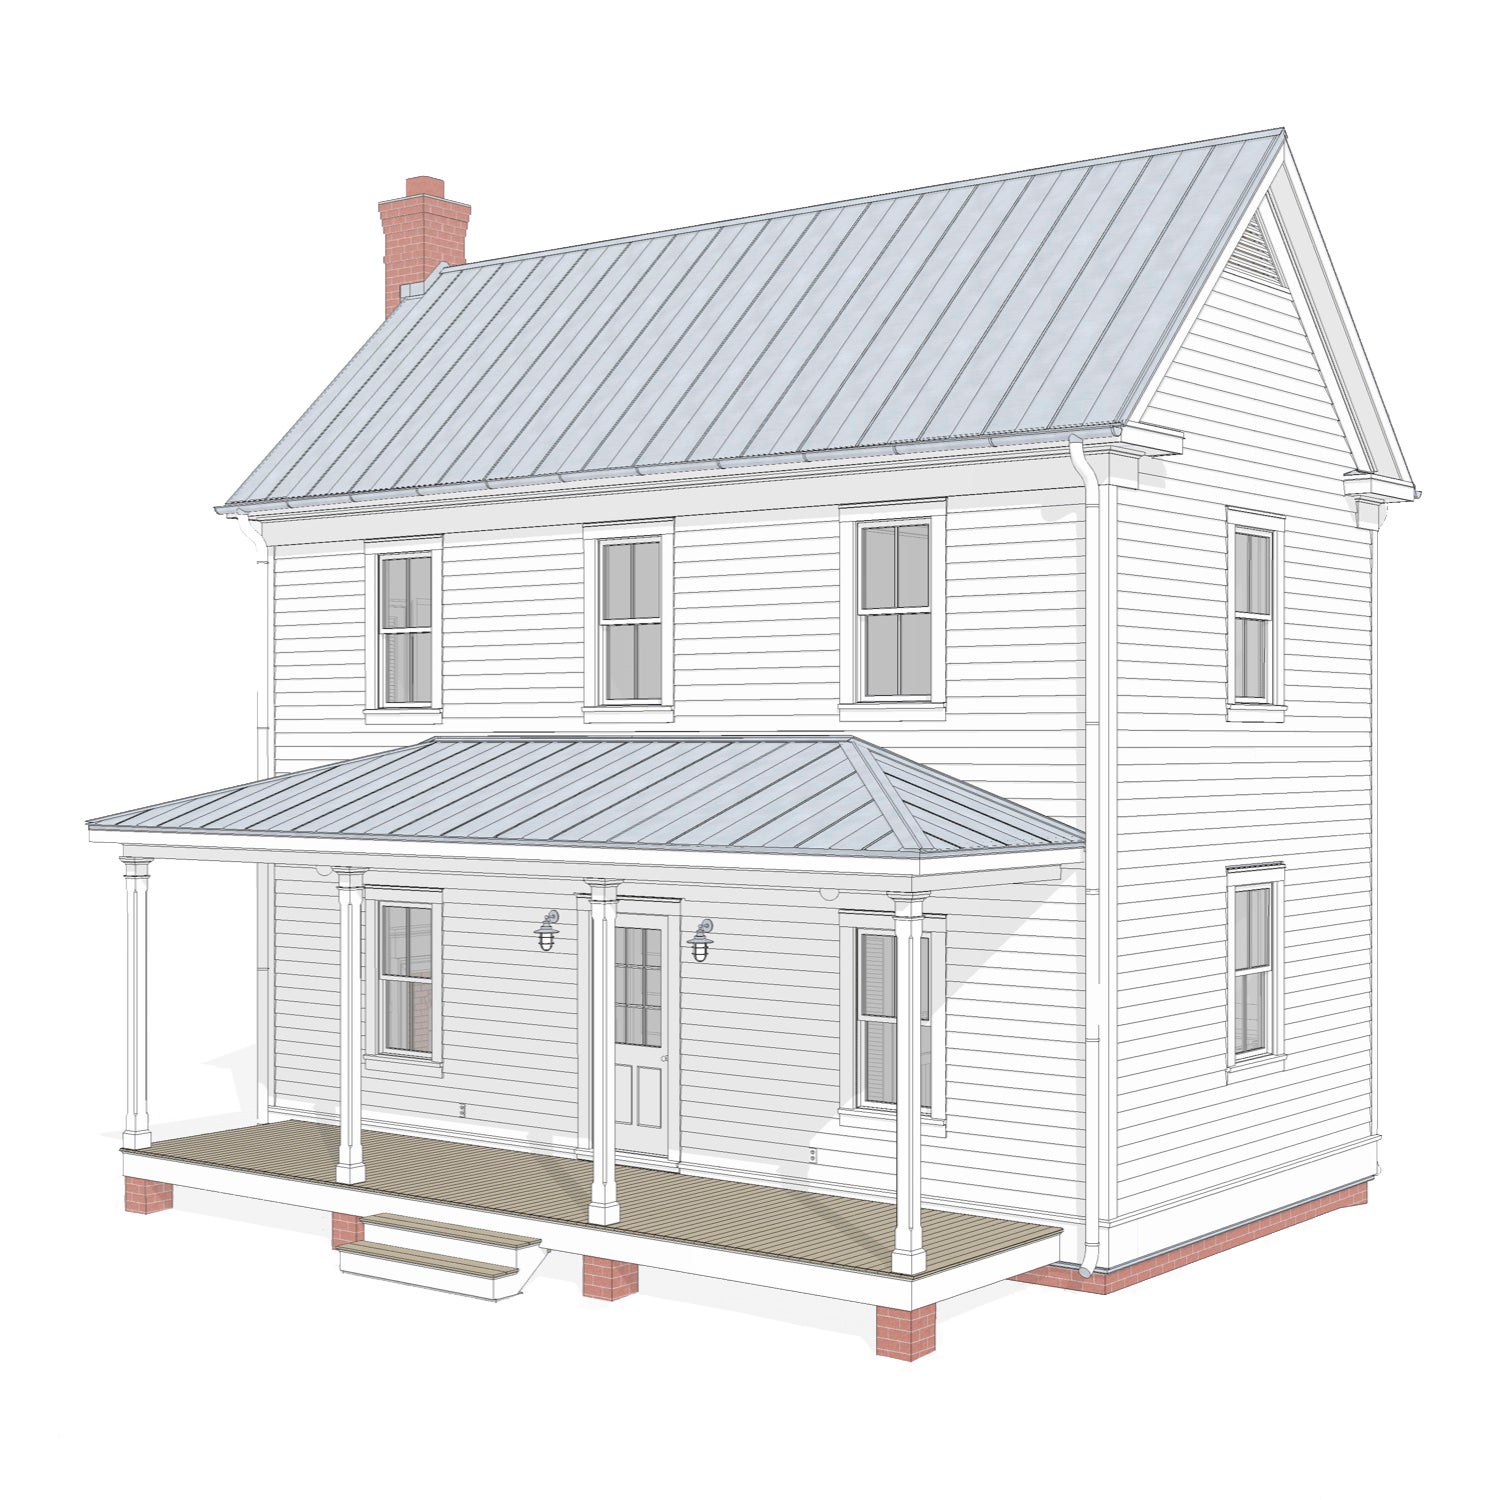 old fashioned farmhouse plans